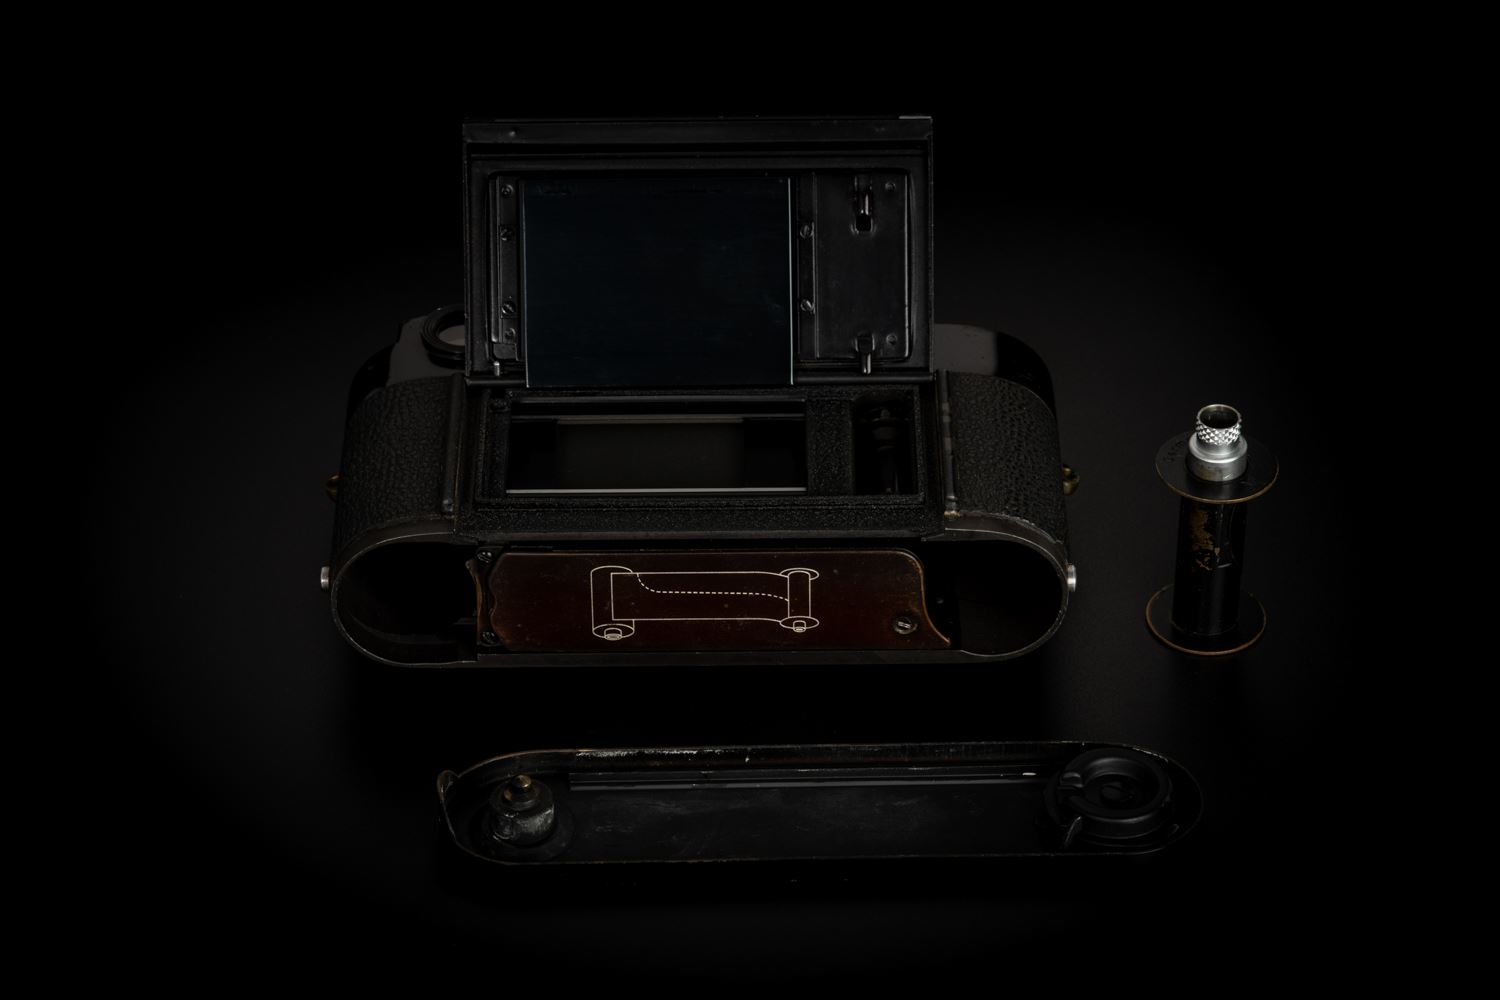 Picture of Leica M3 Original Black Paint with Leica Summicron-M 50mm f/2 Rigid Ver.2 Black Paint